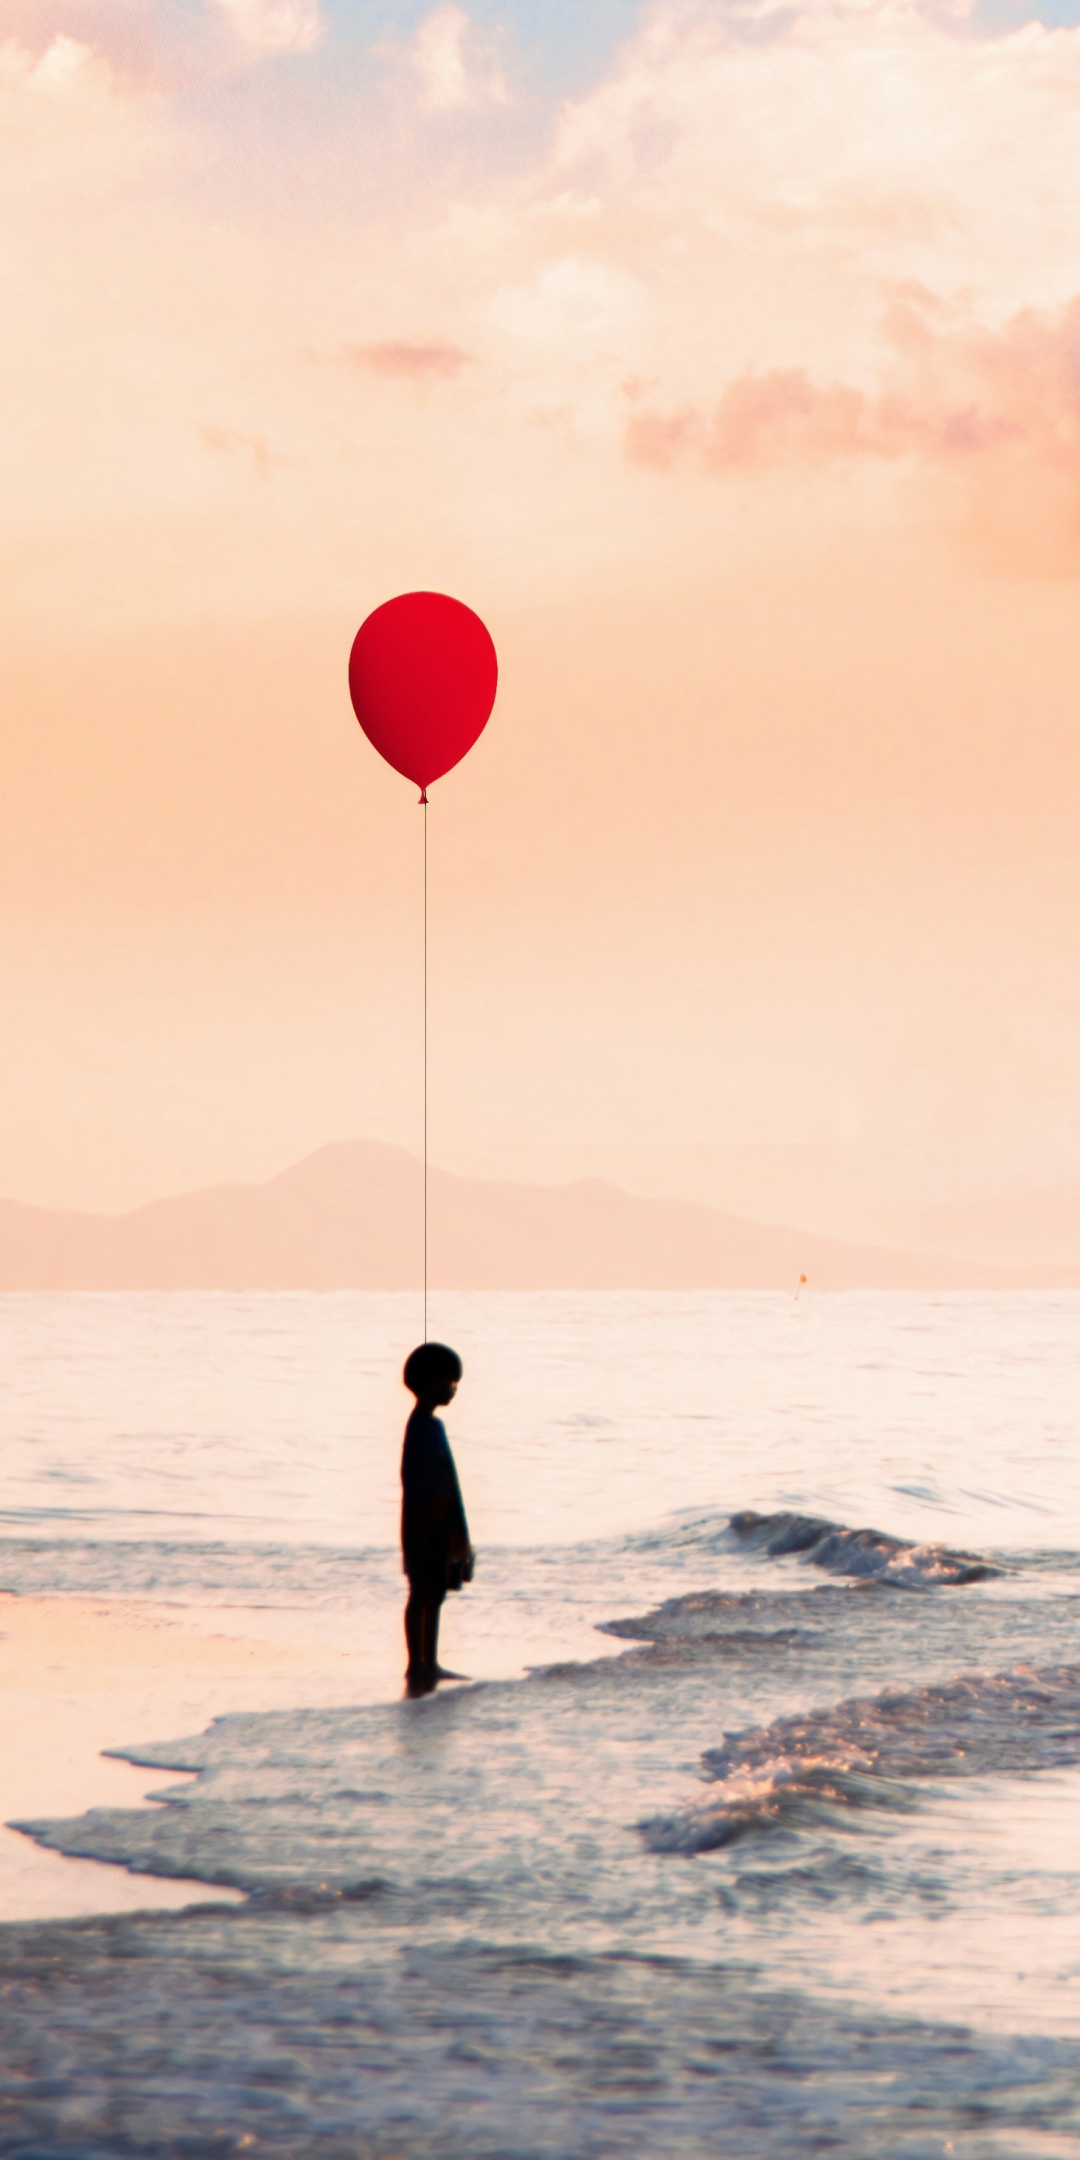 Kid with red ballon, at seashore, art, 1080x2160 wallpaper